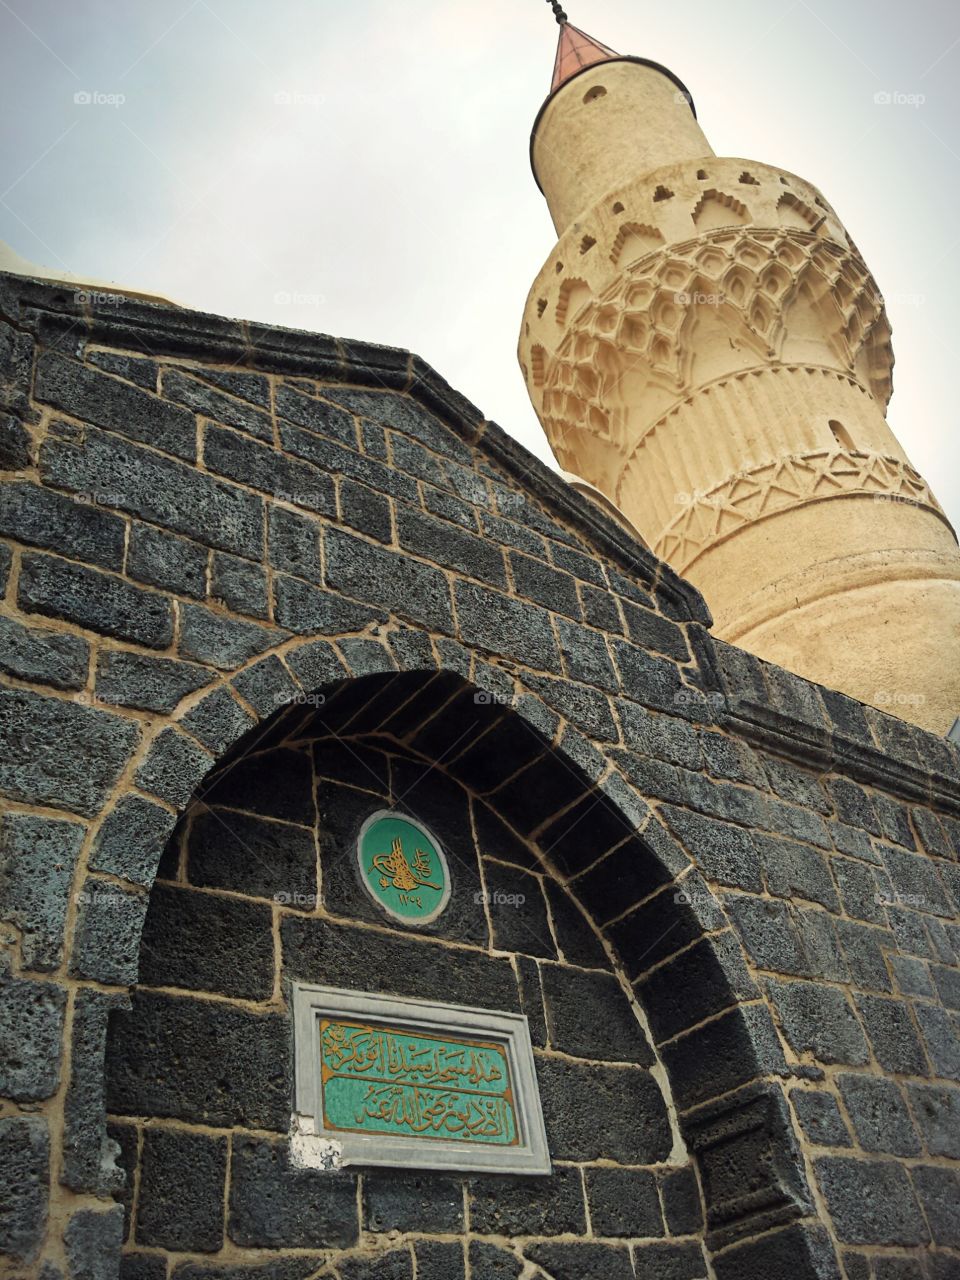 Abu bakr el seddiq mosque. Al madnia, Saudi Arabia.
مسجد ابو بكر الصديق . المدينة المنورة. السعودية